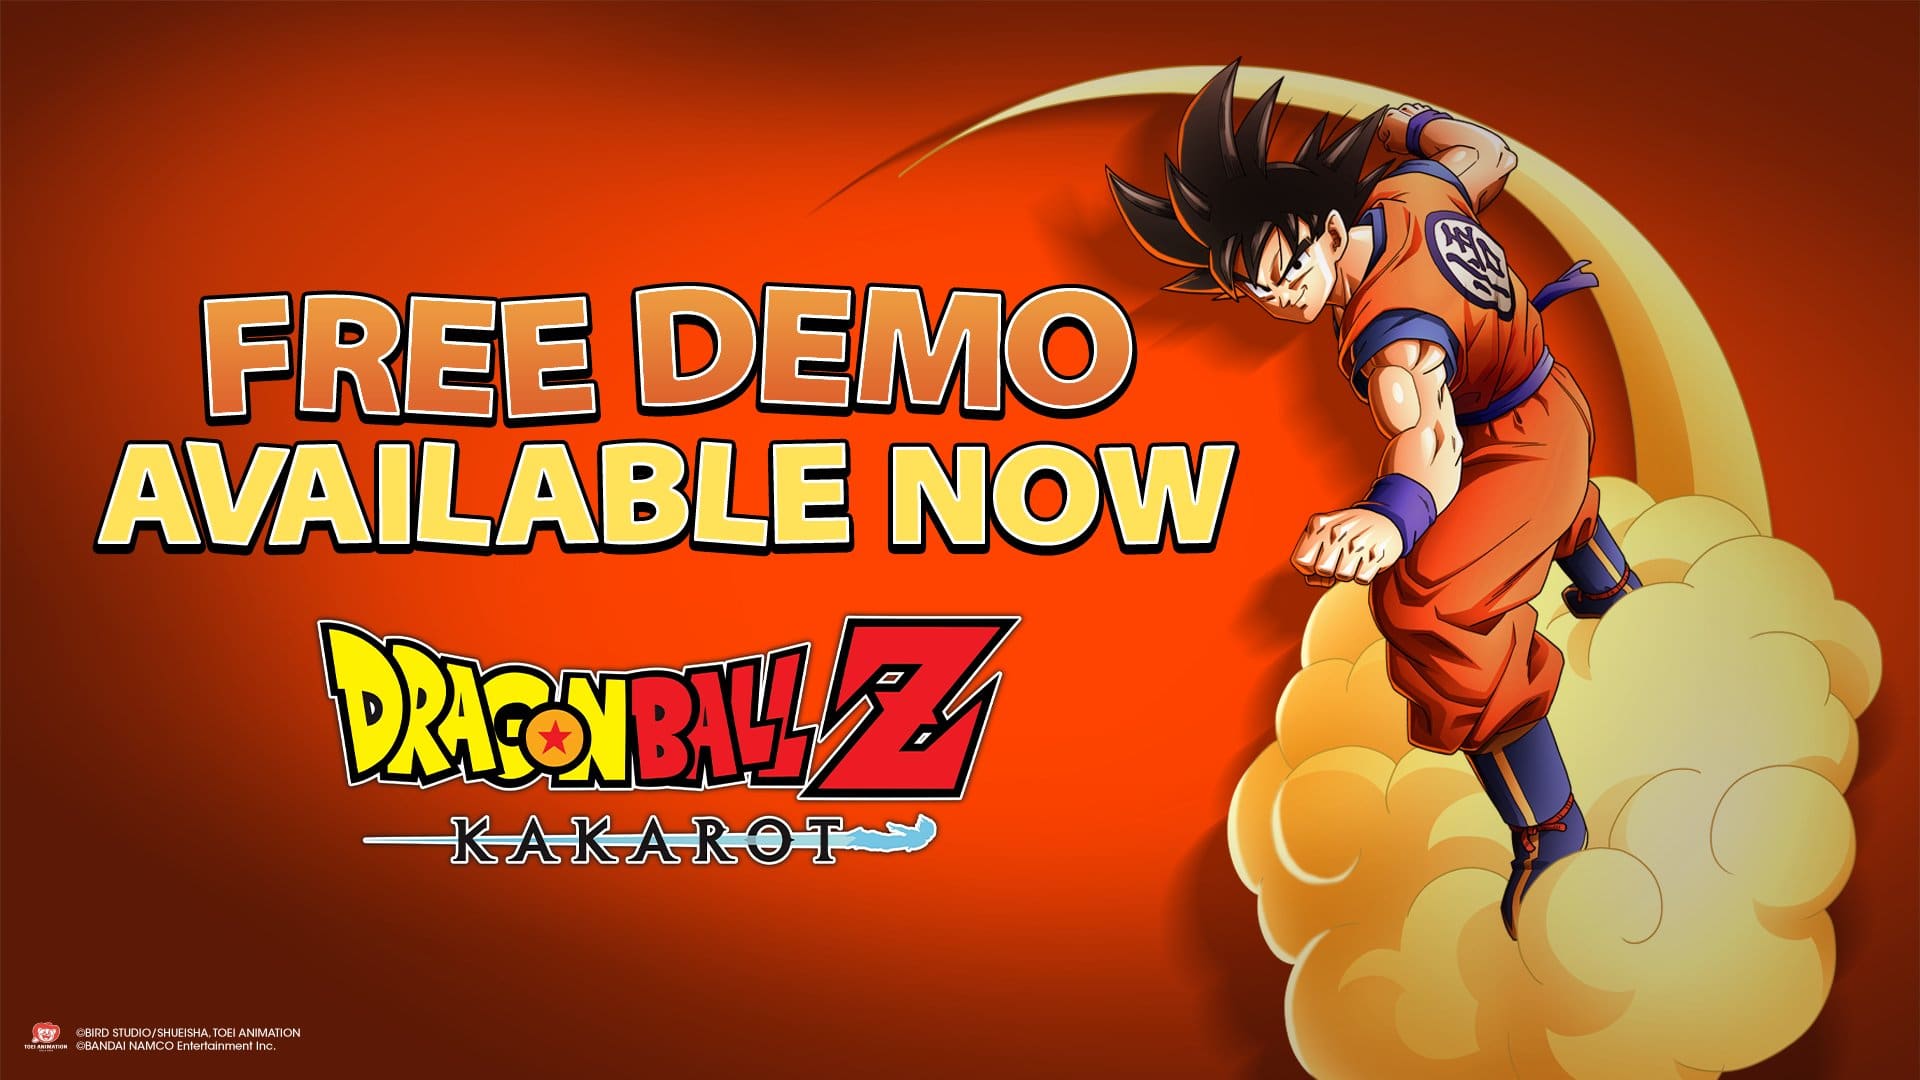 Dragon Ball Z: Kakarot demo available